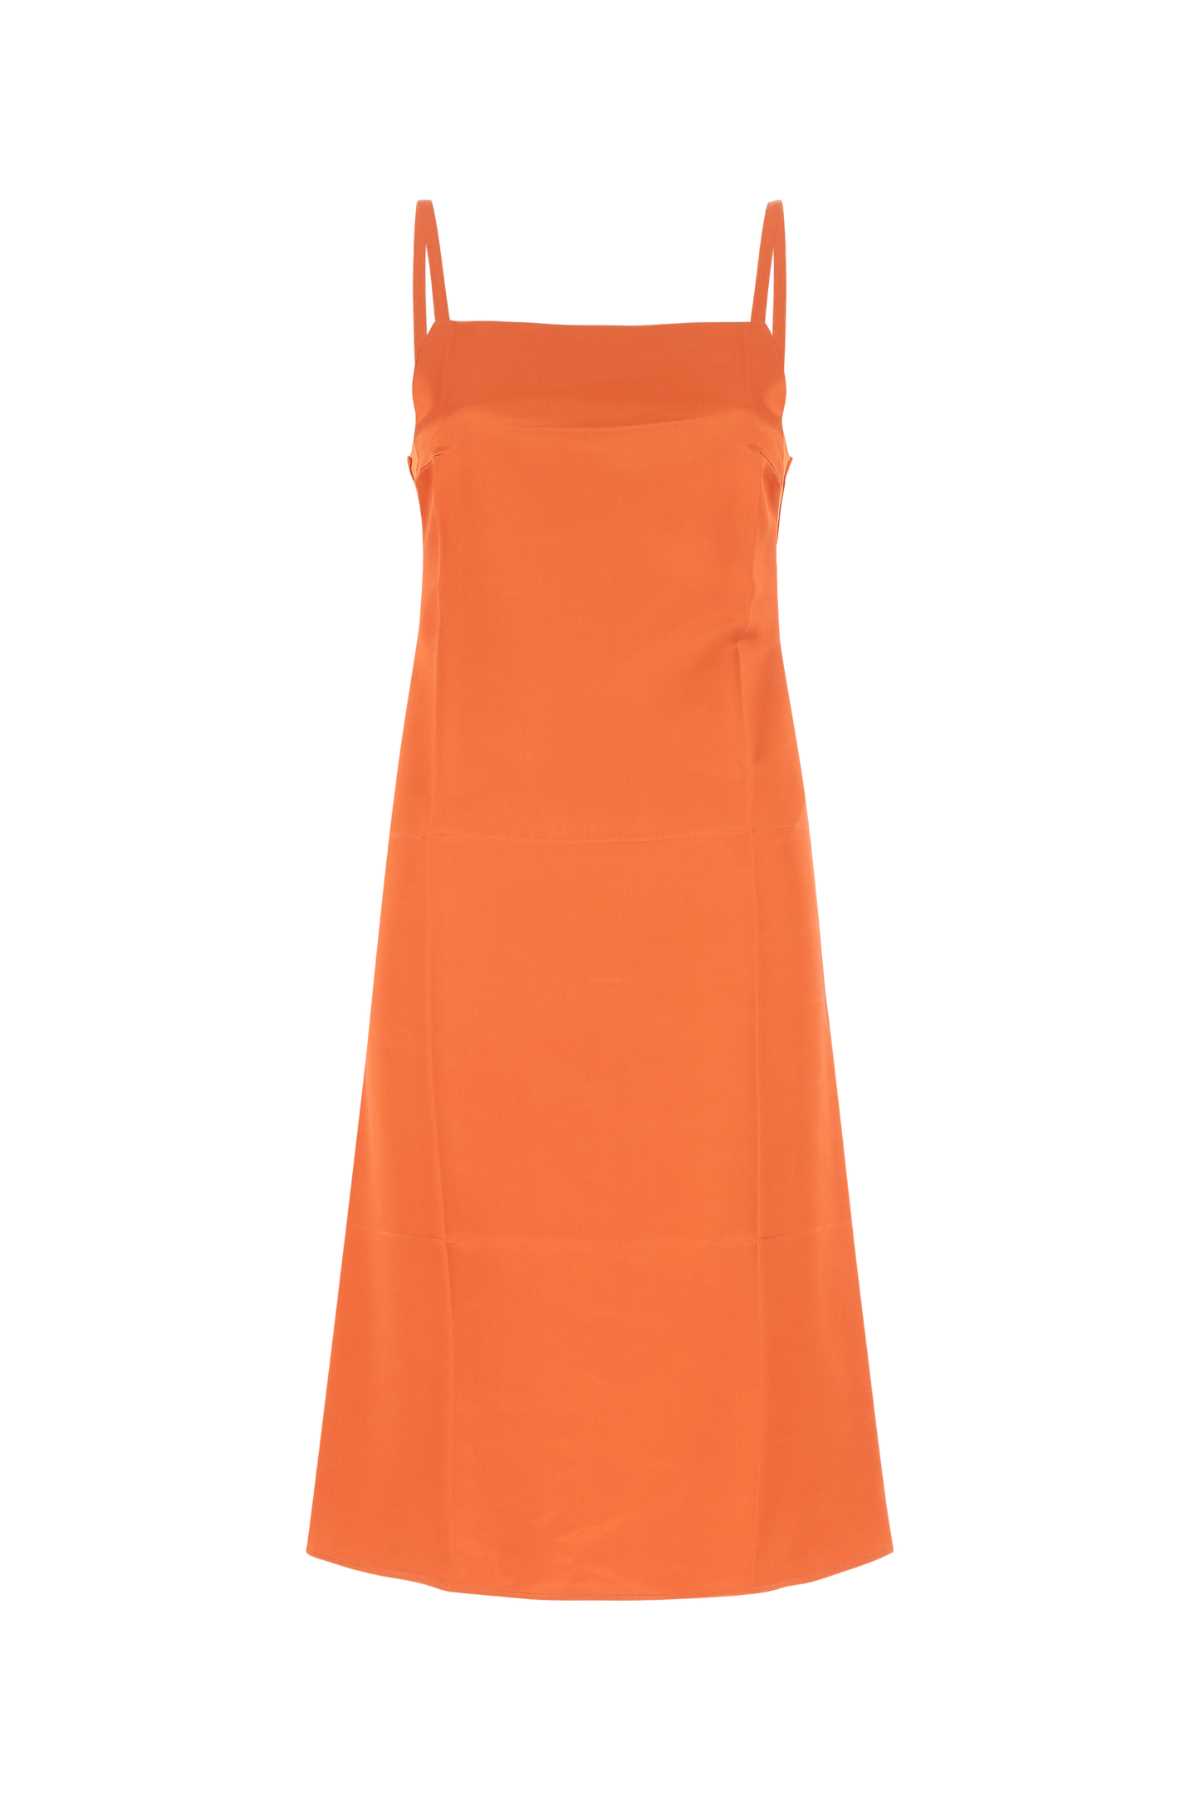 Shop Loewe Orange Satin Dress In Brightorange